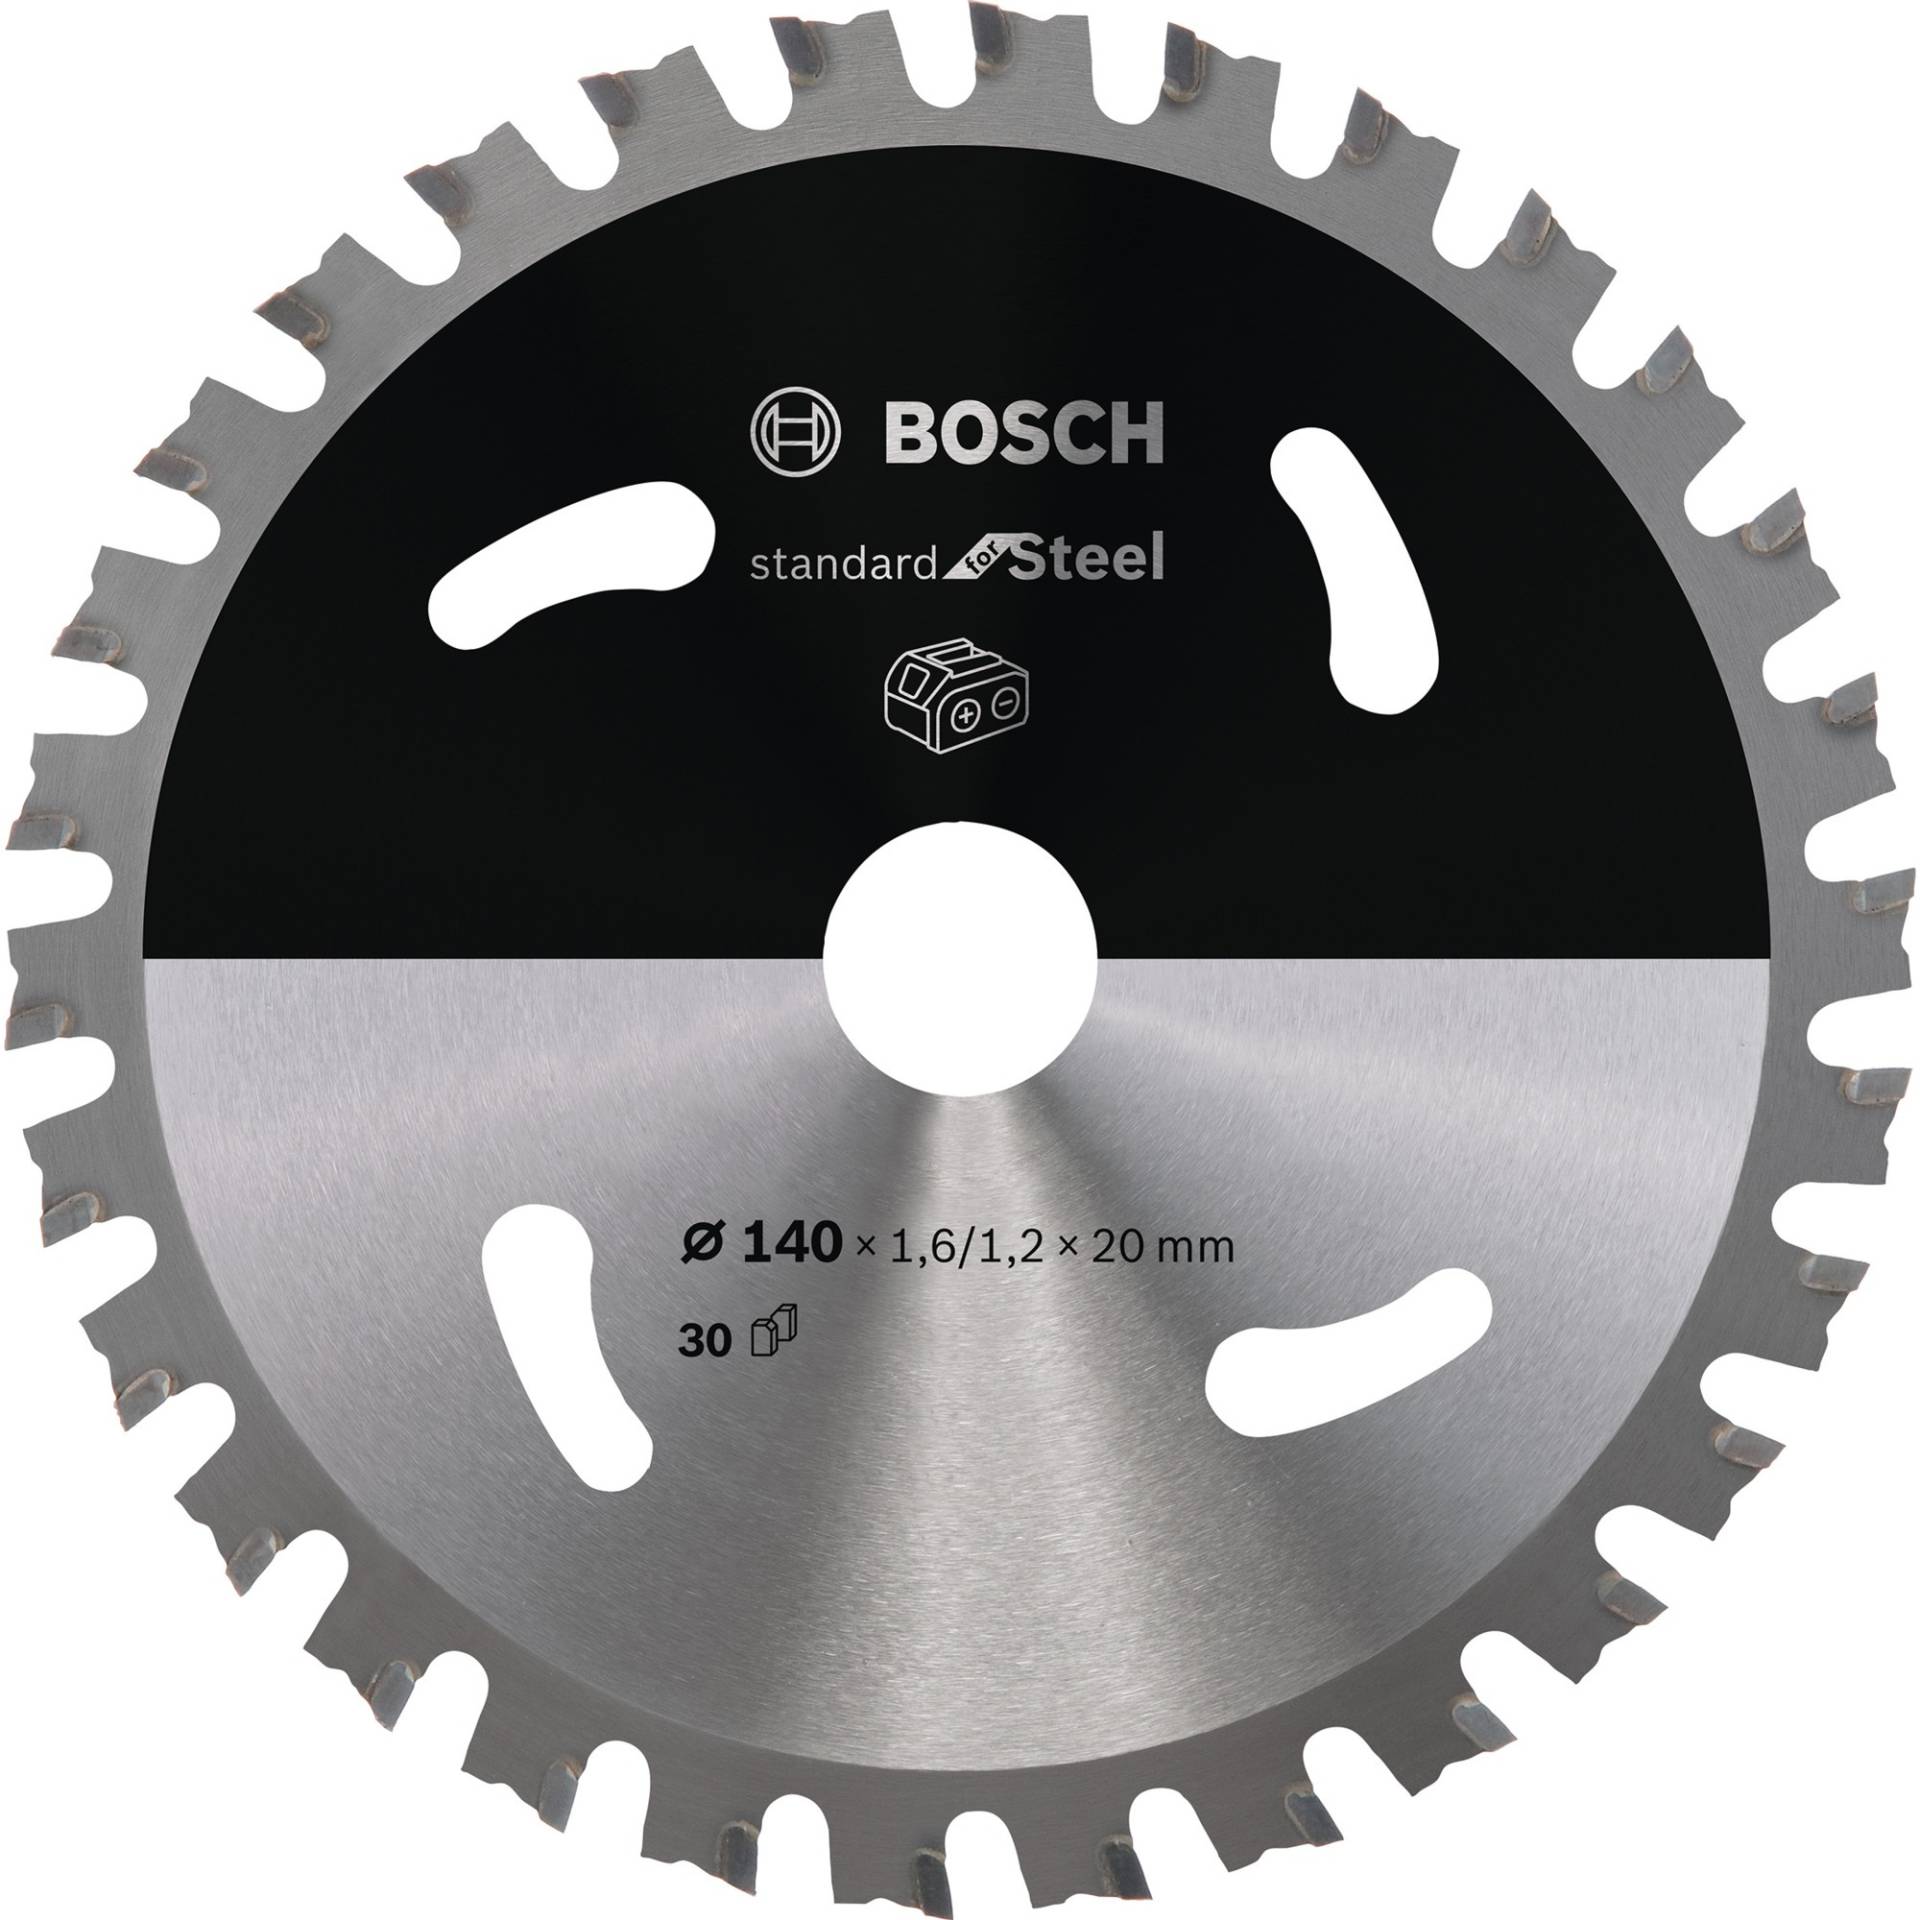 Kreissägeblatt Standard for Steel, Ø 140mm, 30Z von Bosch